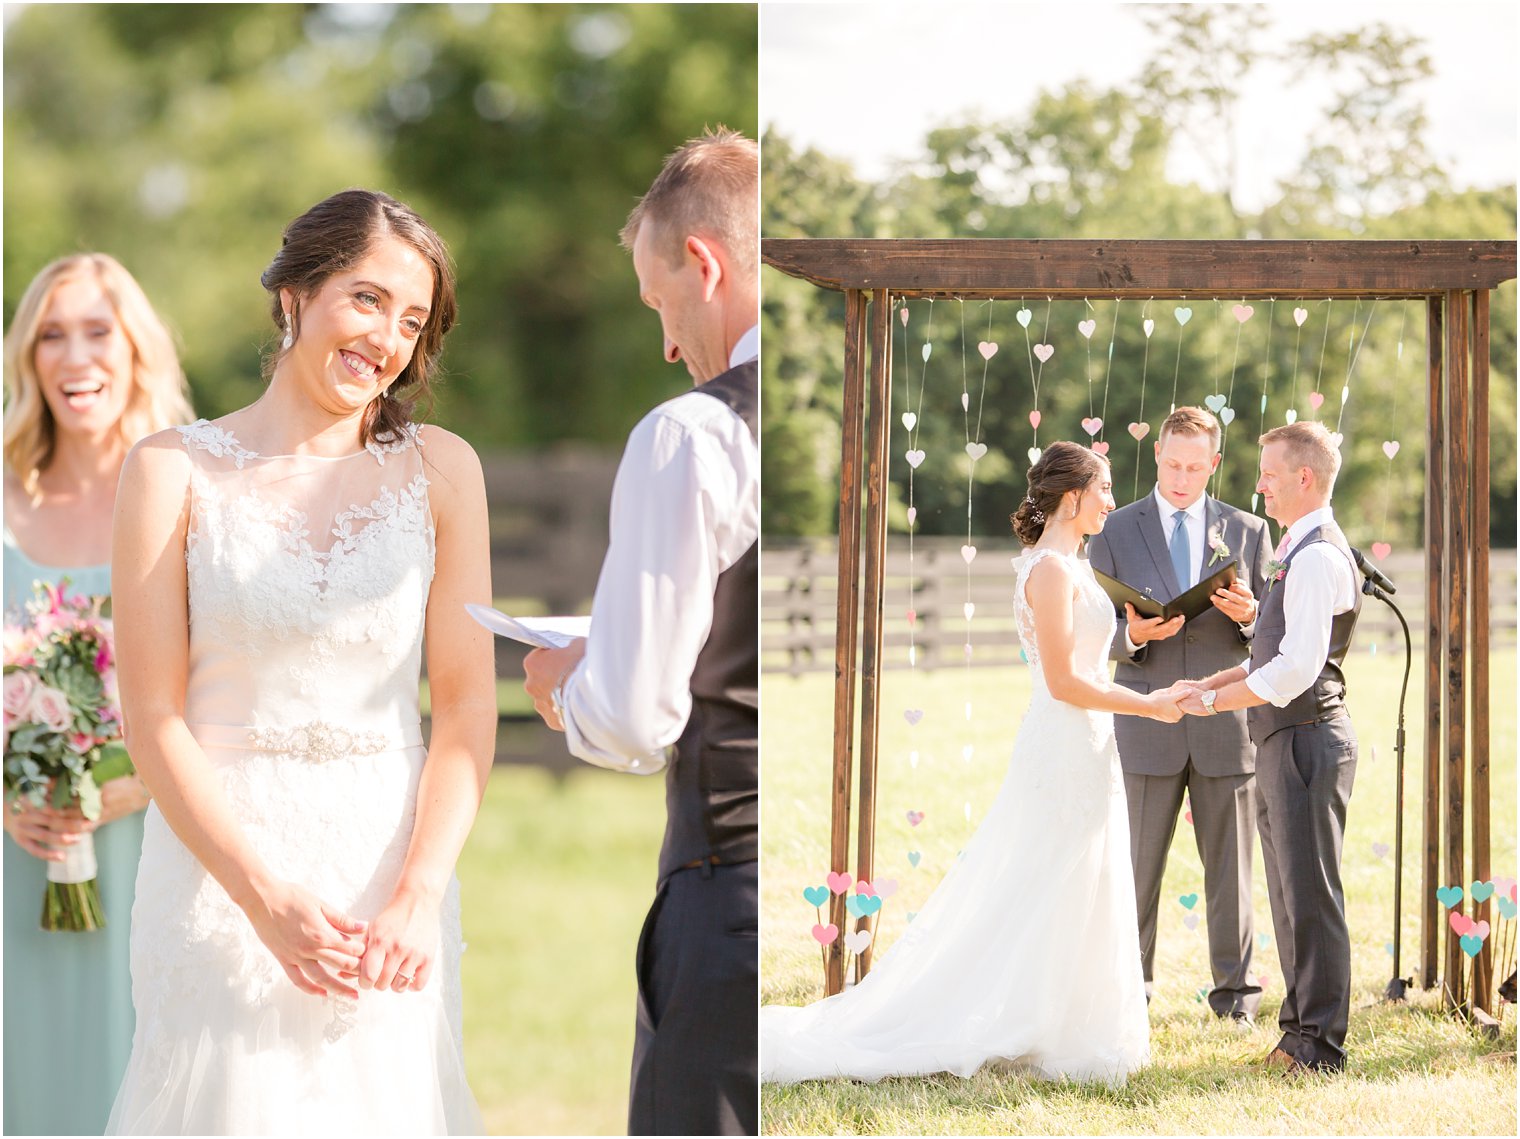 Wedding ceremony photos at Stone Rows Farm